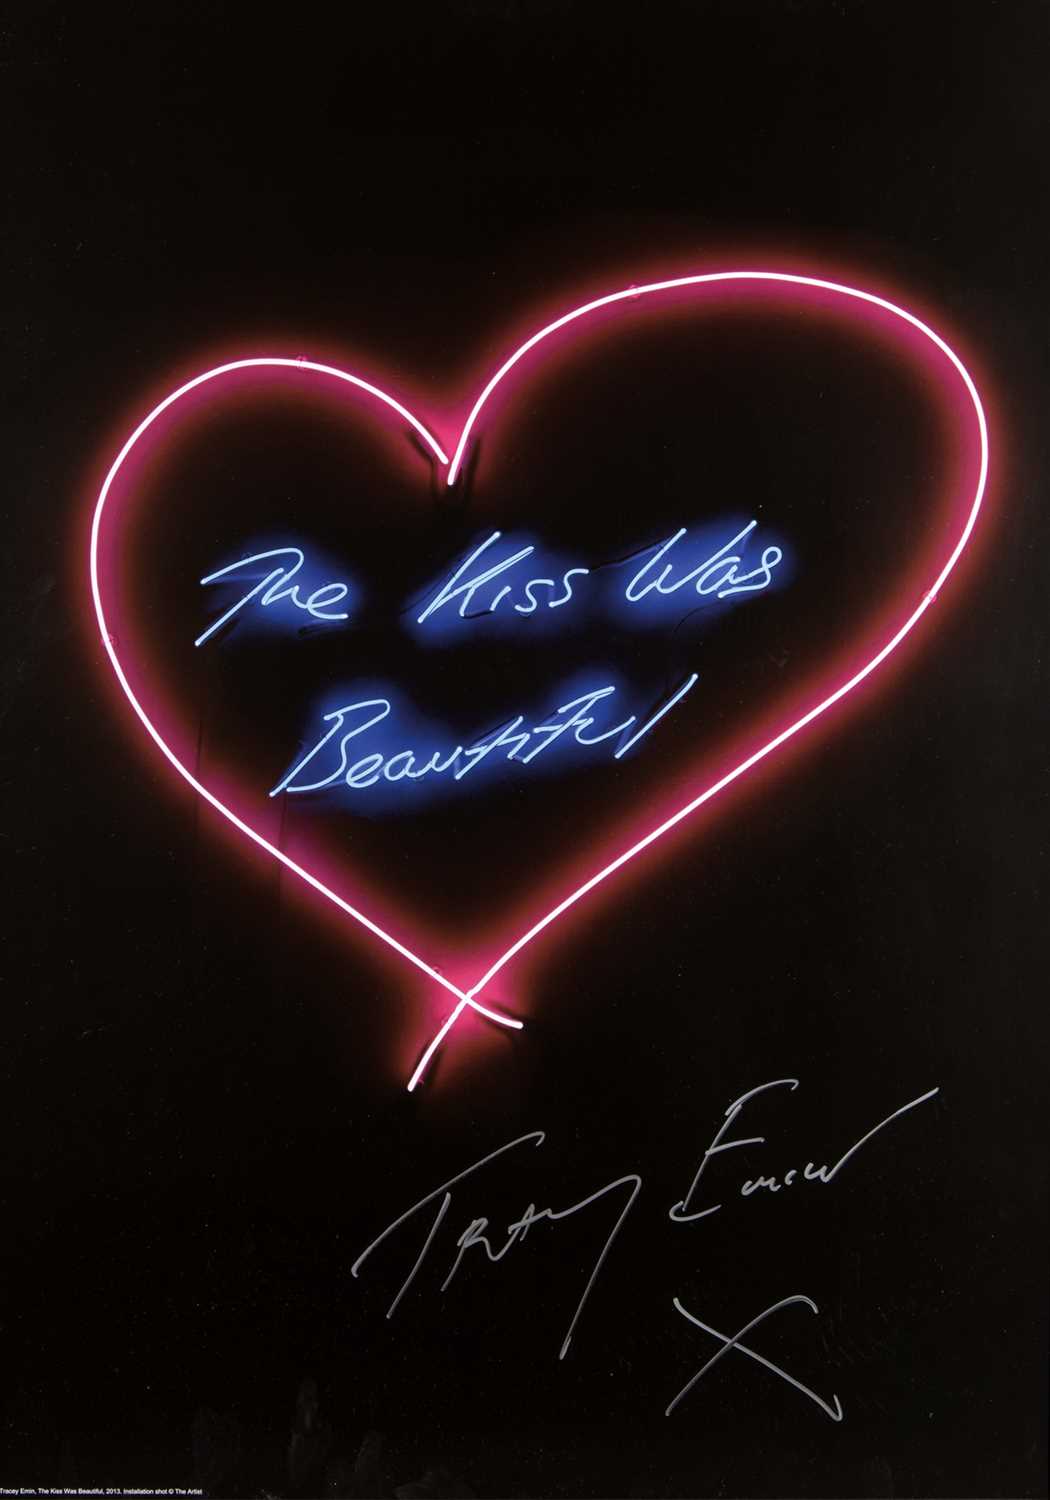 Lot 78 - Tracey Emin (British b.1963), ‘The Kiss Was Beautiful’, 2016